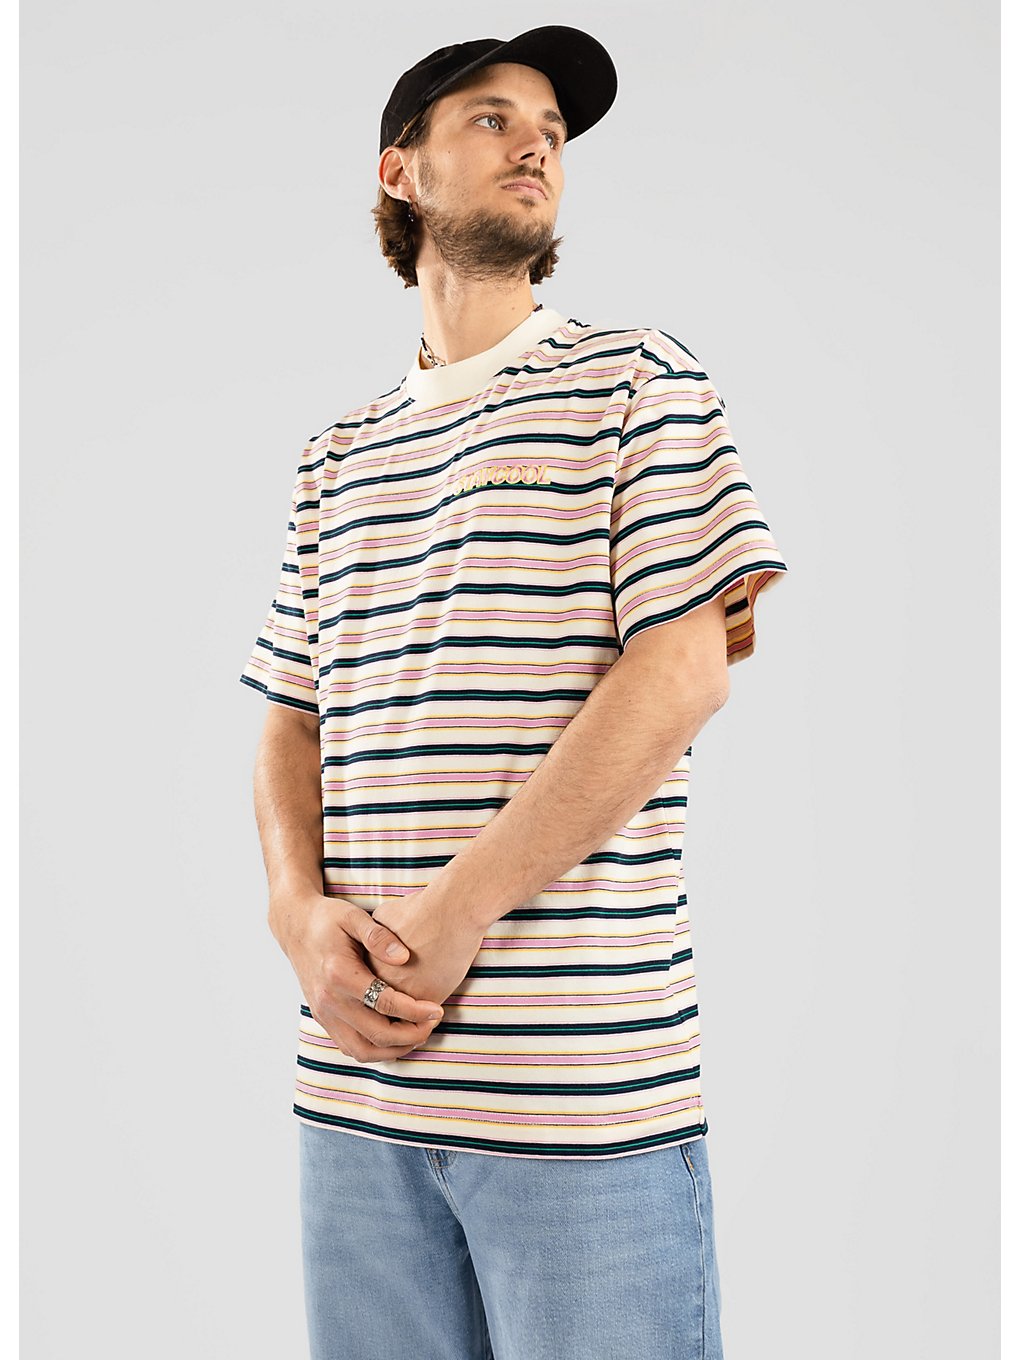 Staycoolnyc Bubblegum Striped T-Shirt patroon